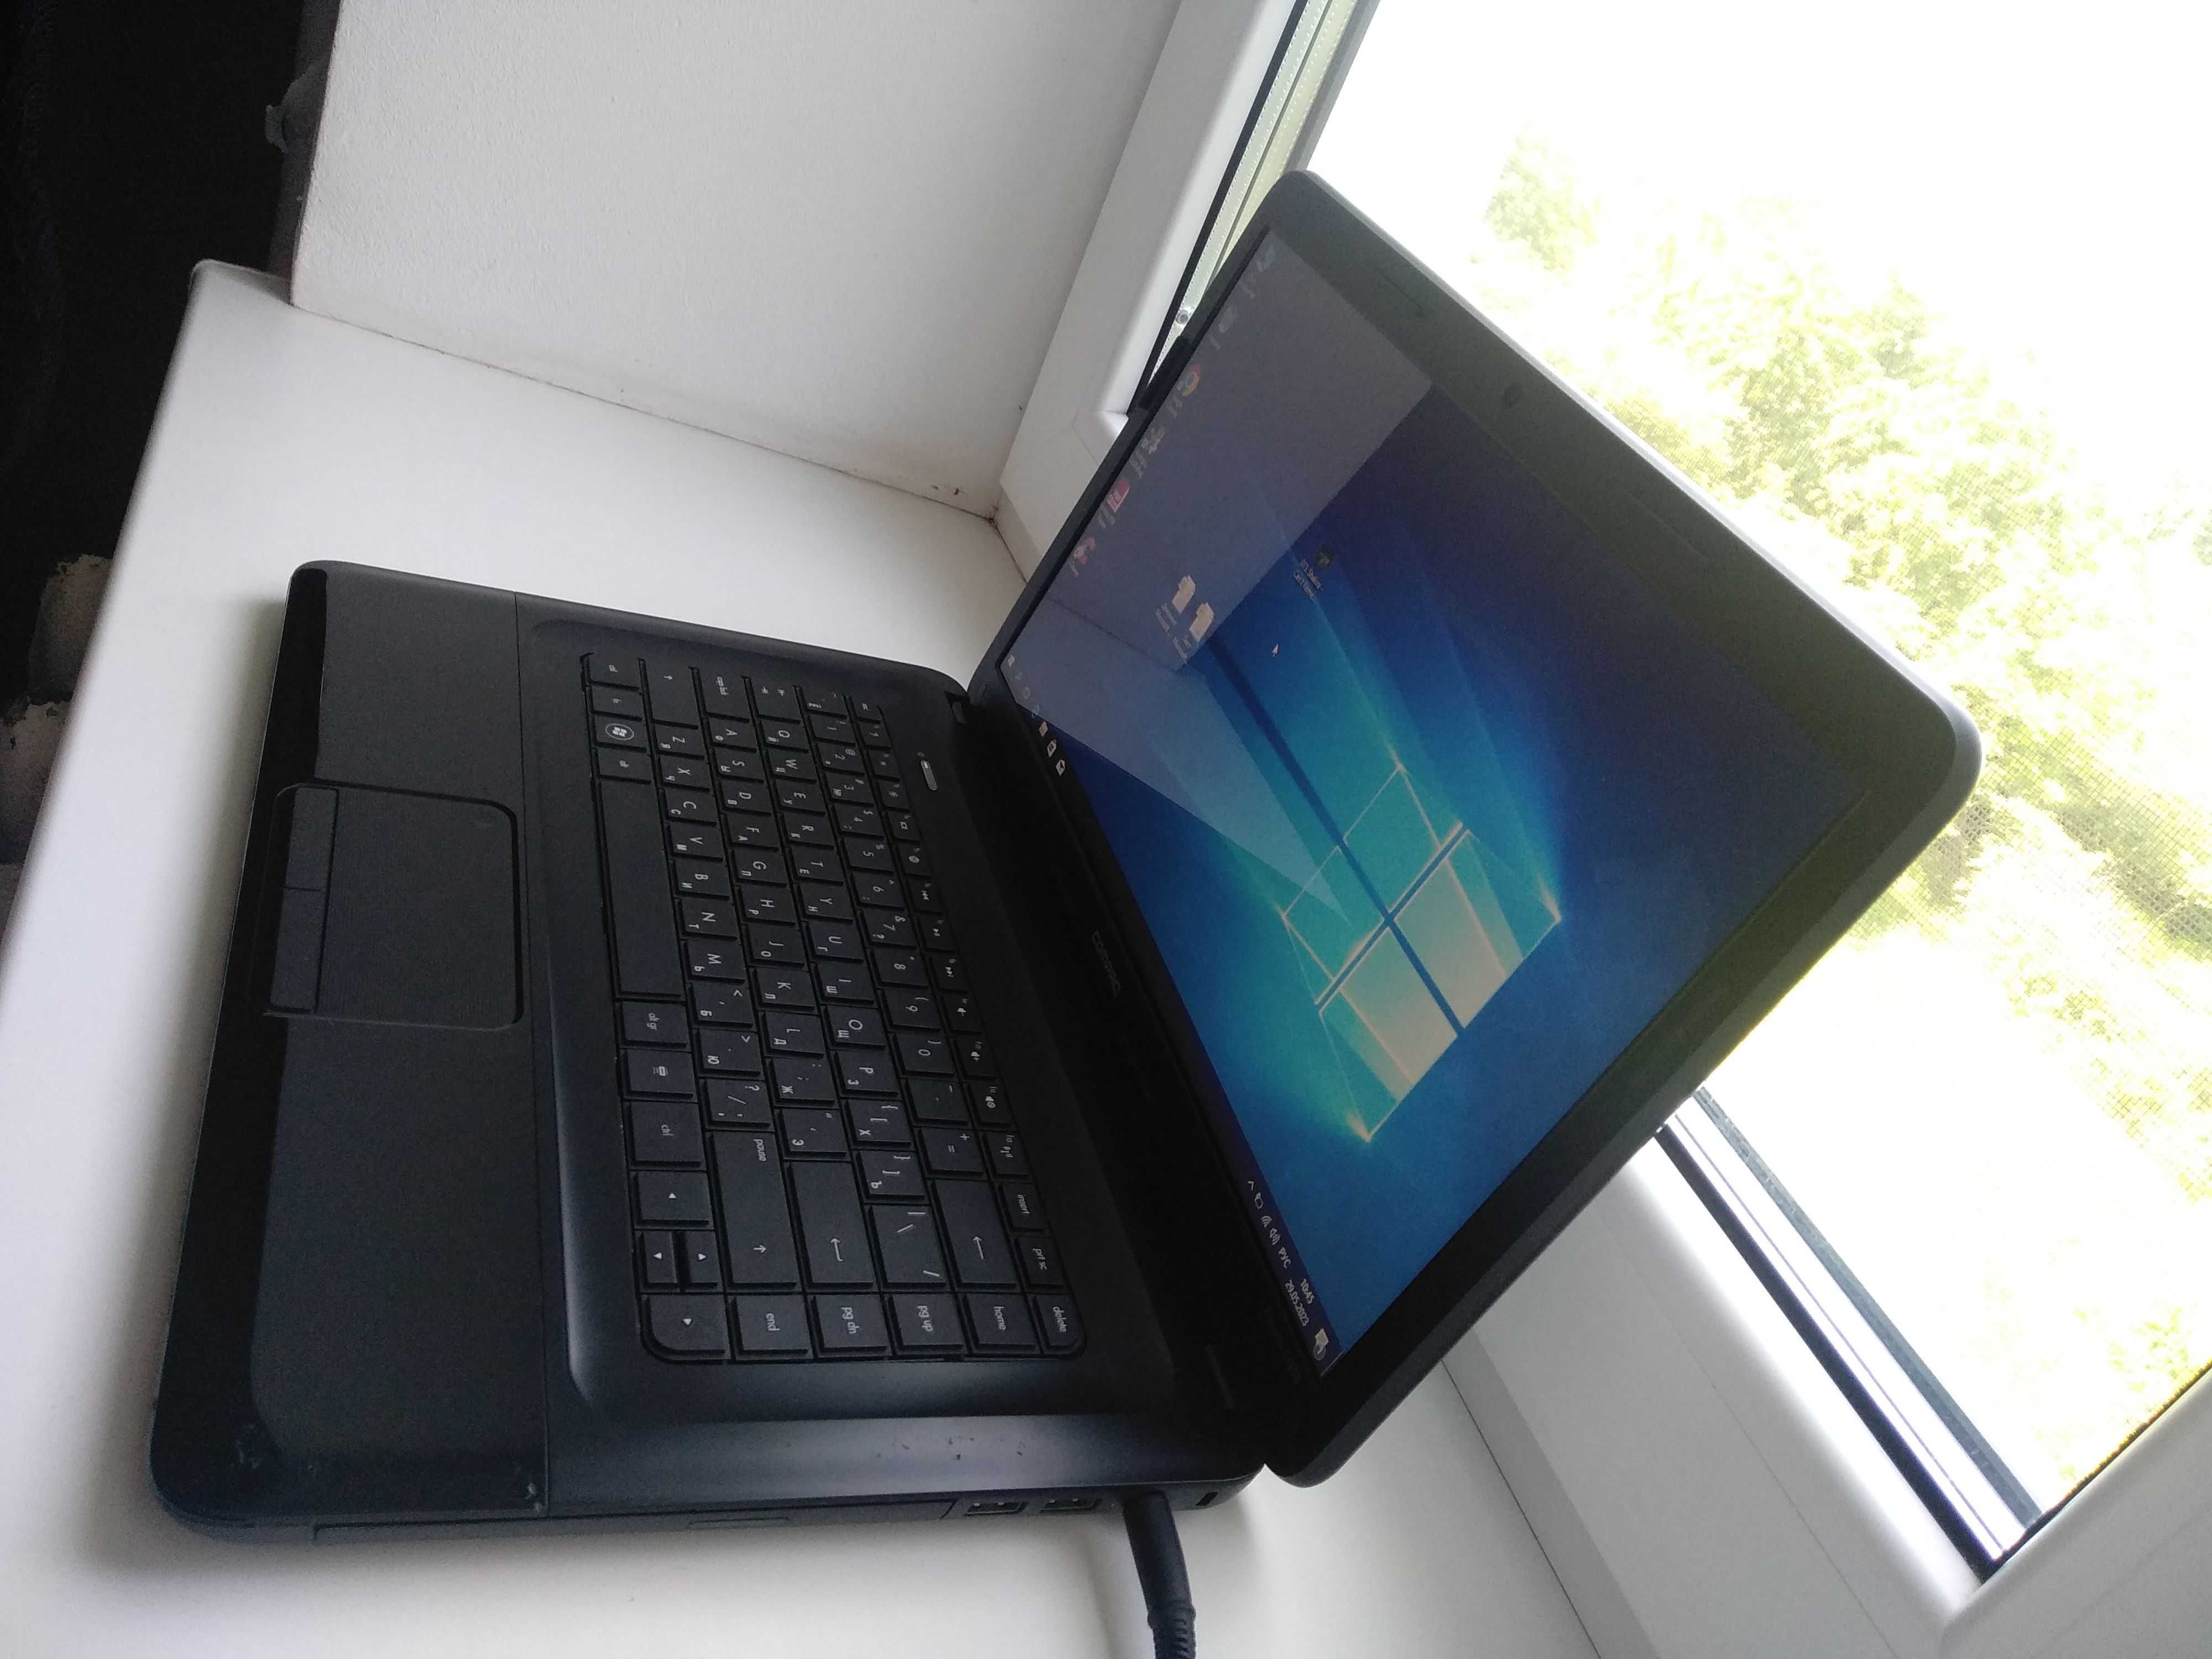 hp compag хороший ноутбук для учебы, офиса, дома ОЗУ-6Гб HDD-500ГБ